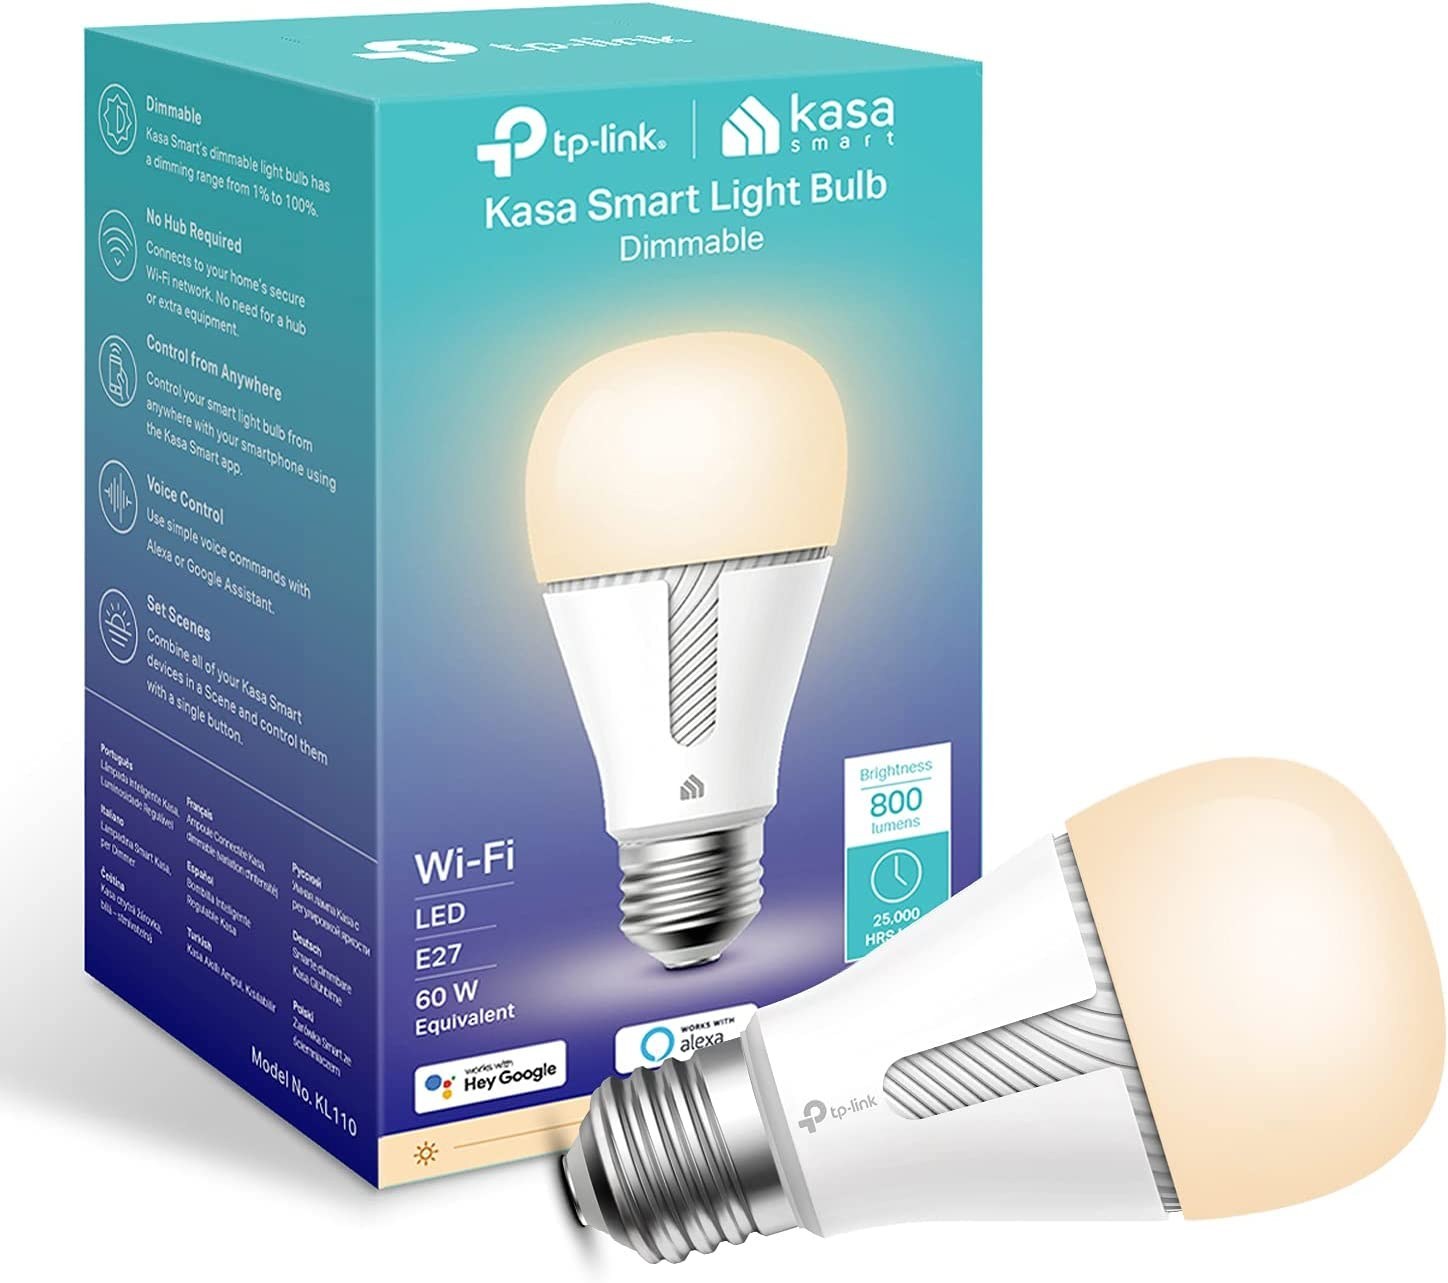 TP-Link Tapo L510B LED Smart Light Bulbs (4 Pack) - WiFi, B22 (Bayonet –  Smart Kiwis - DIY Home Security